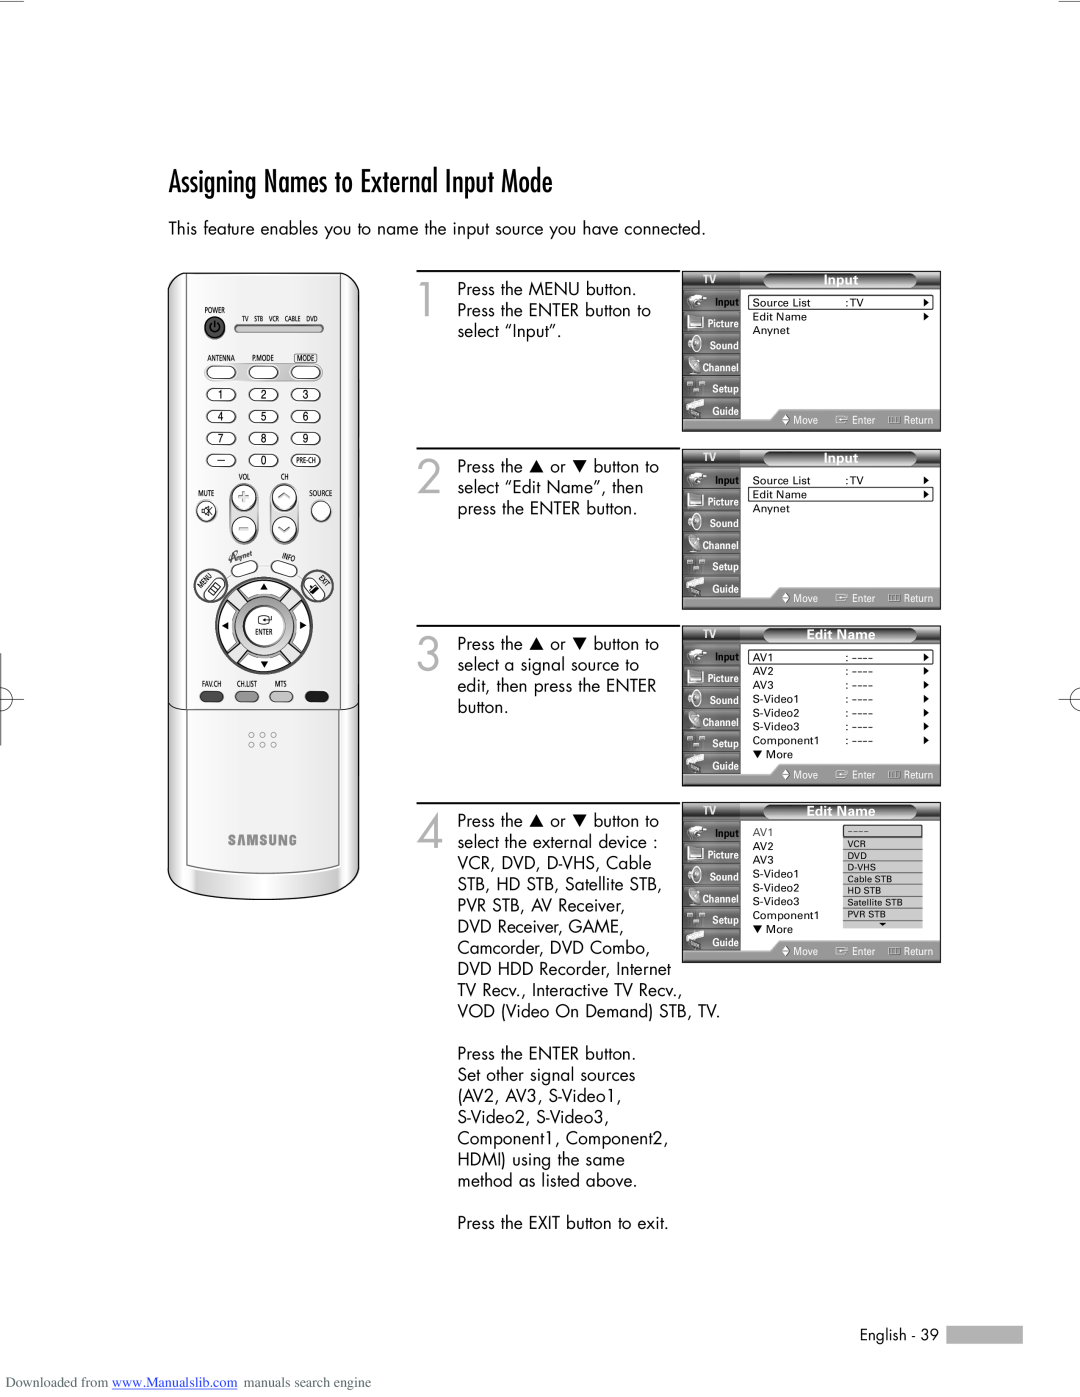 Samsung HL-R6156W, HL-R5656W, HL-R5056W manual Assigning Names to External Input Mode 